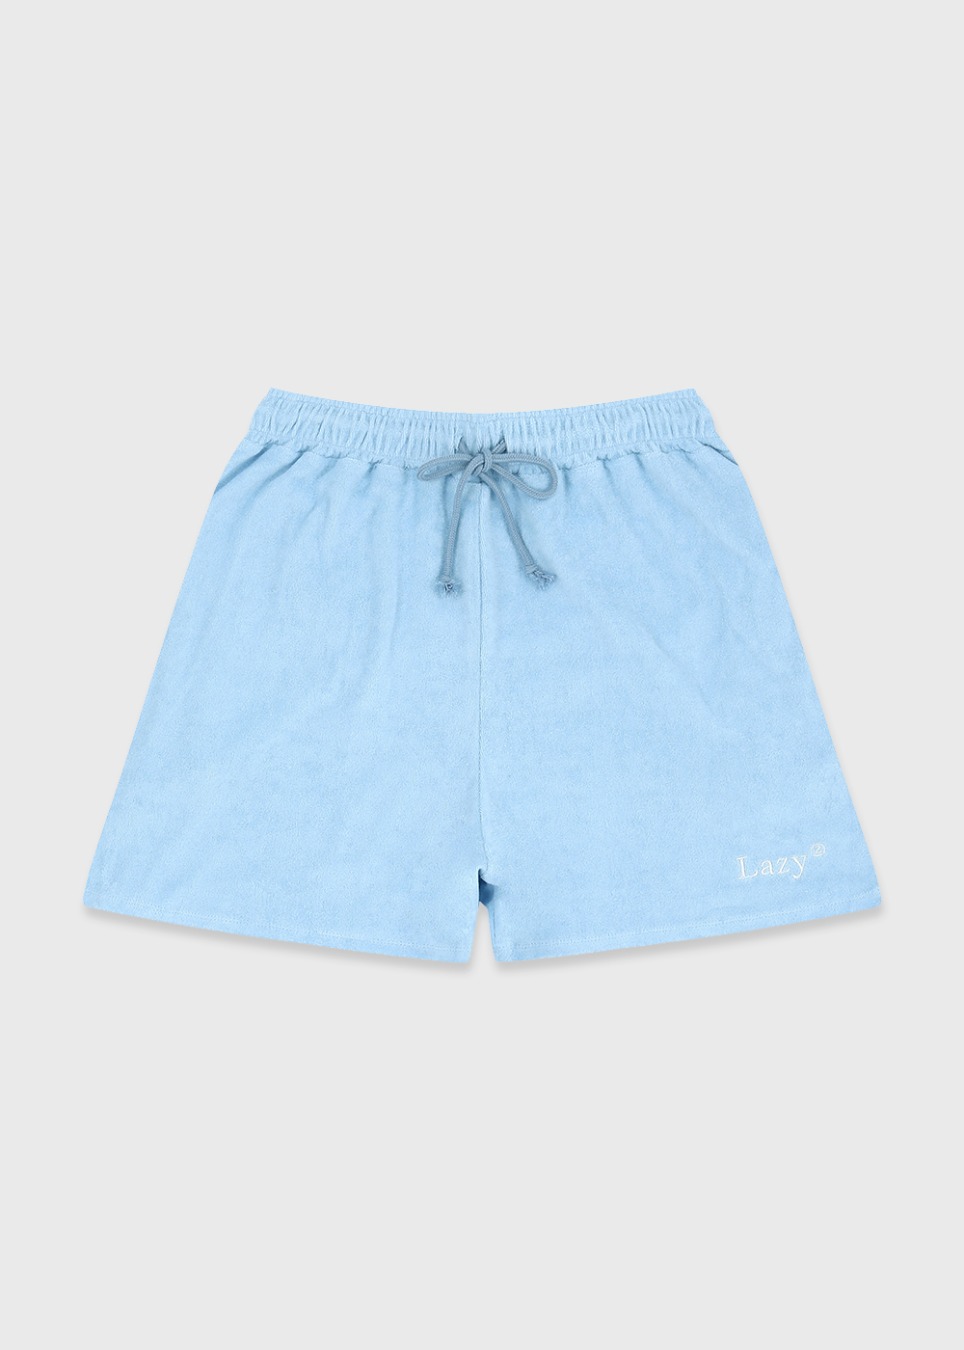 Holiday Shorts : Ocean